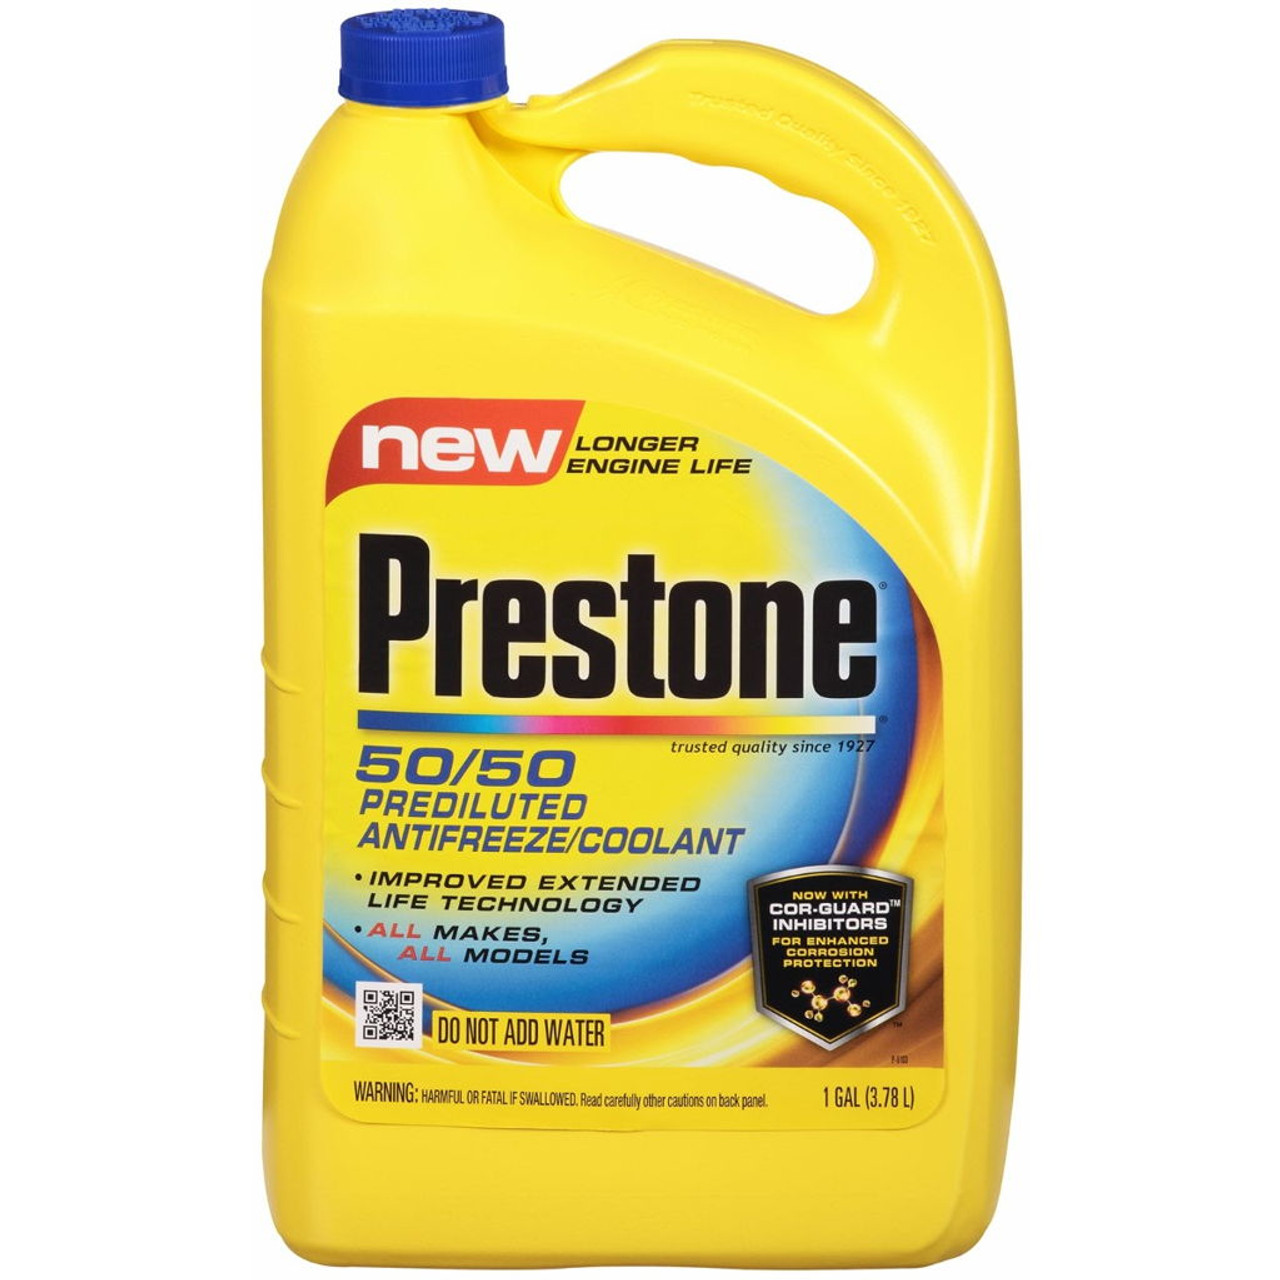 Prestone Antifreeze and Coolant: 50/50 Ready To Use, Original